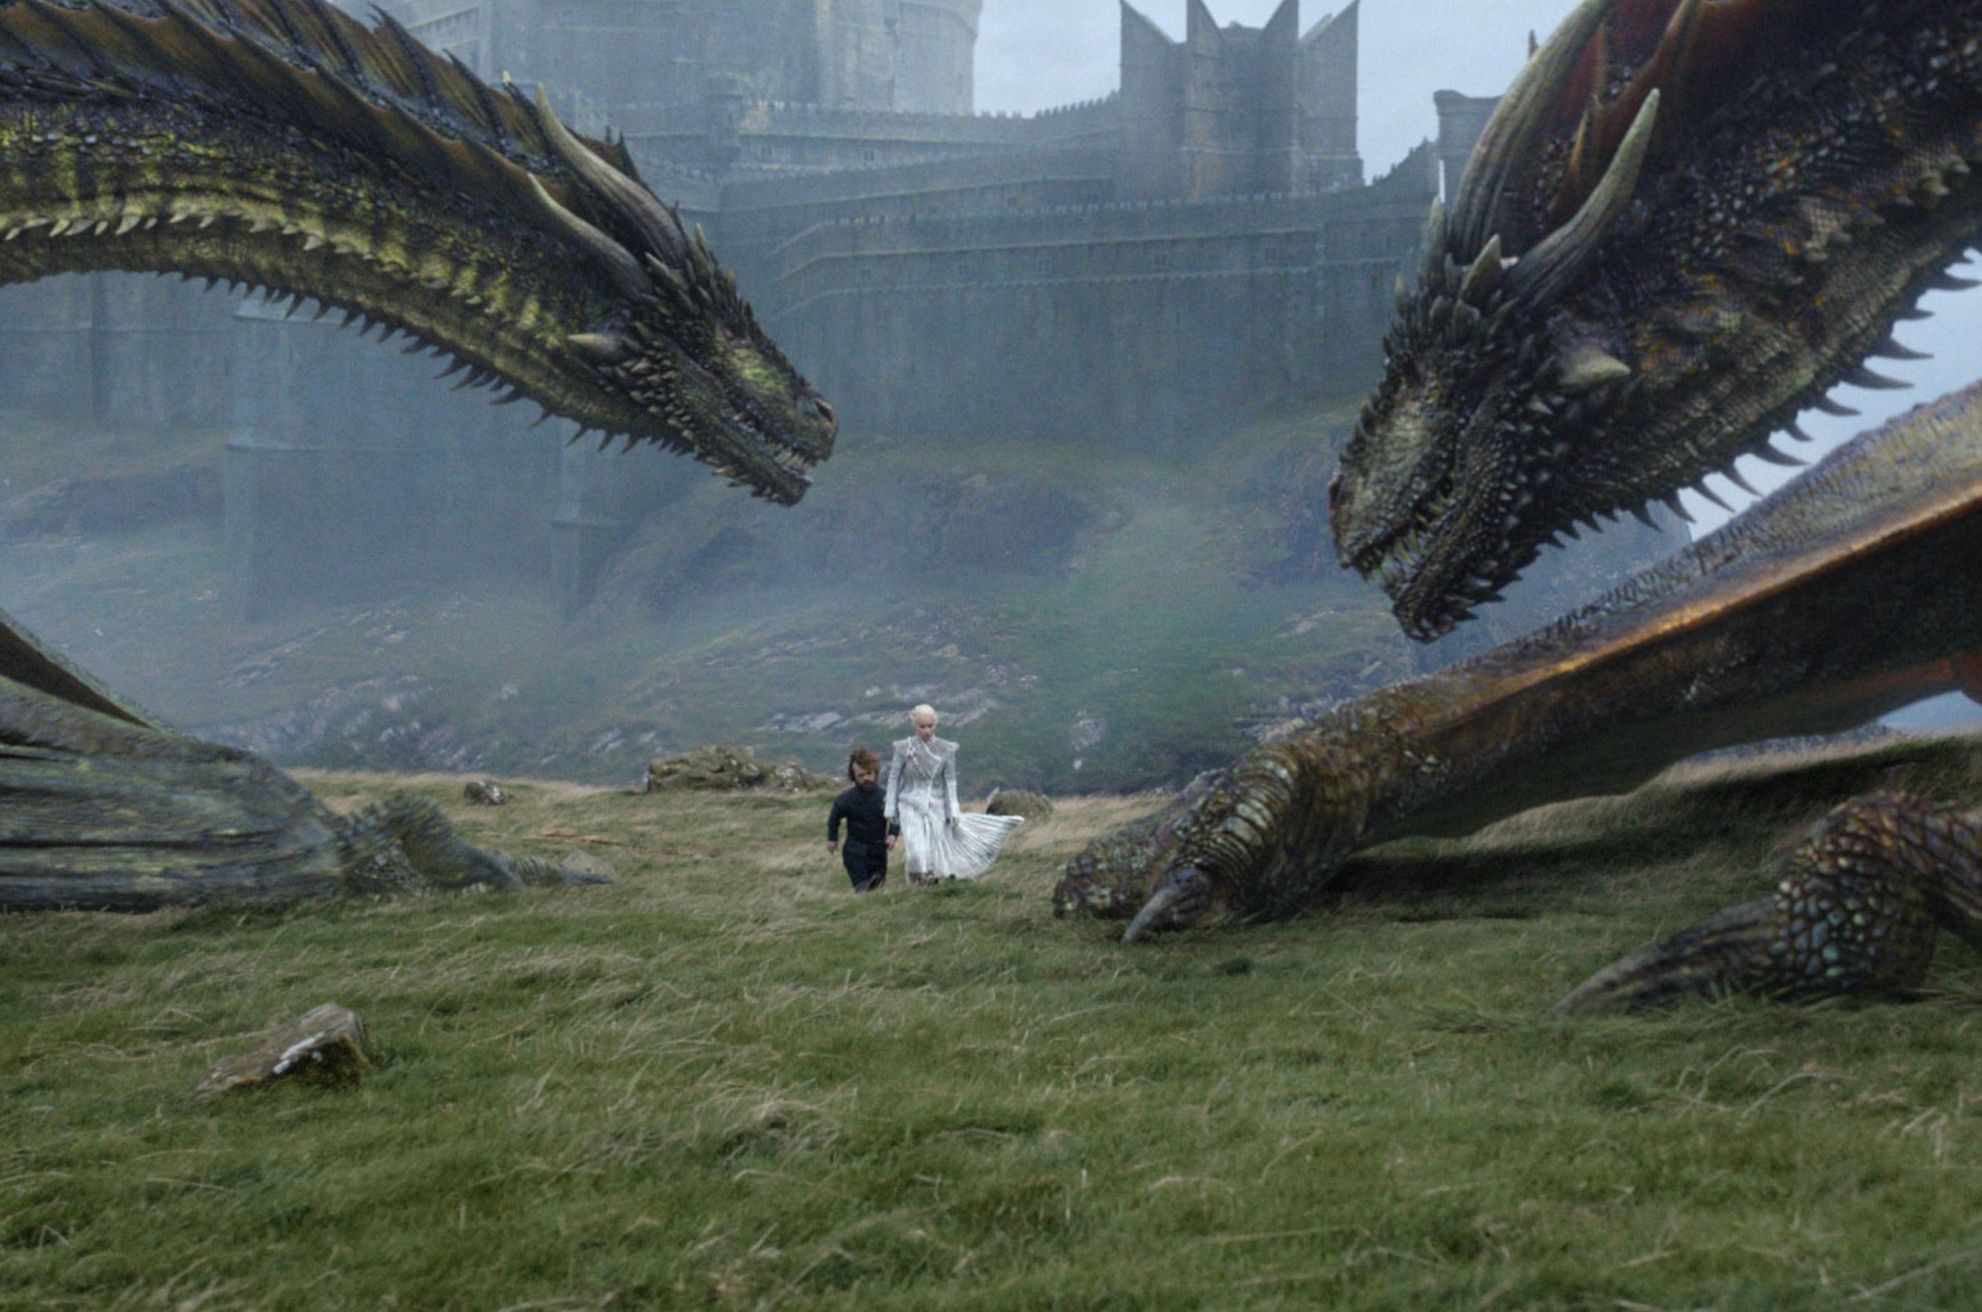 Danny and Tyrion among her dragons